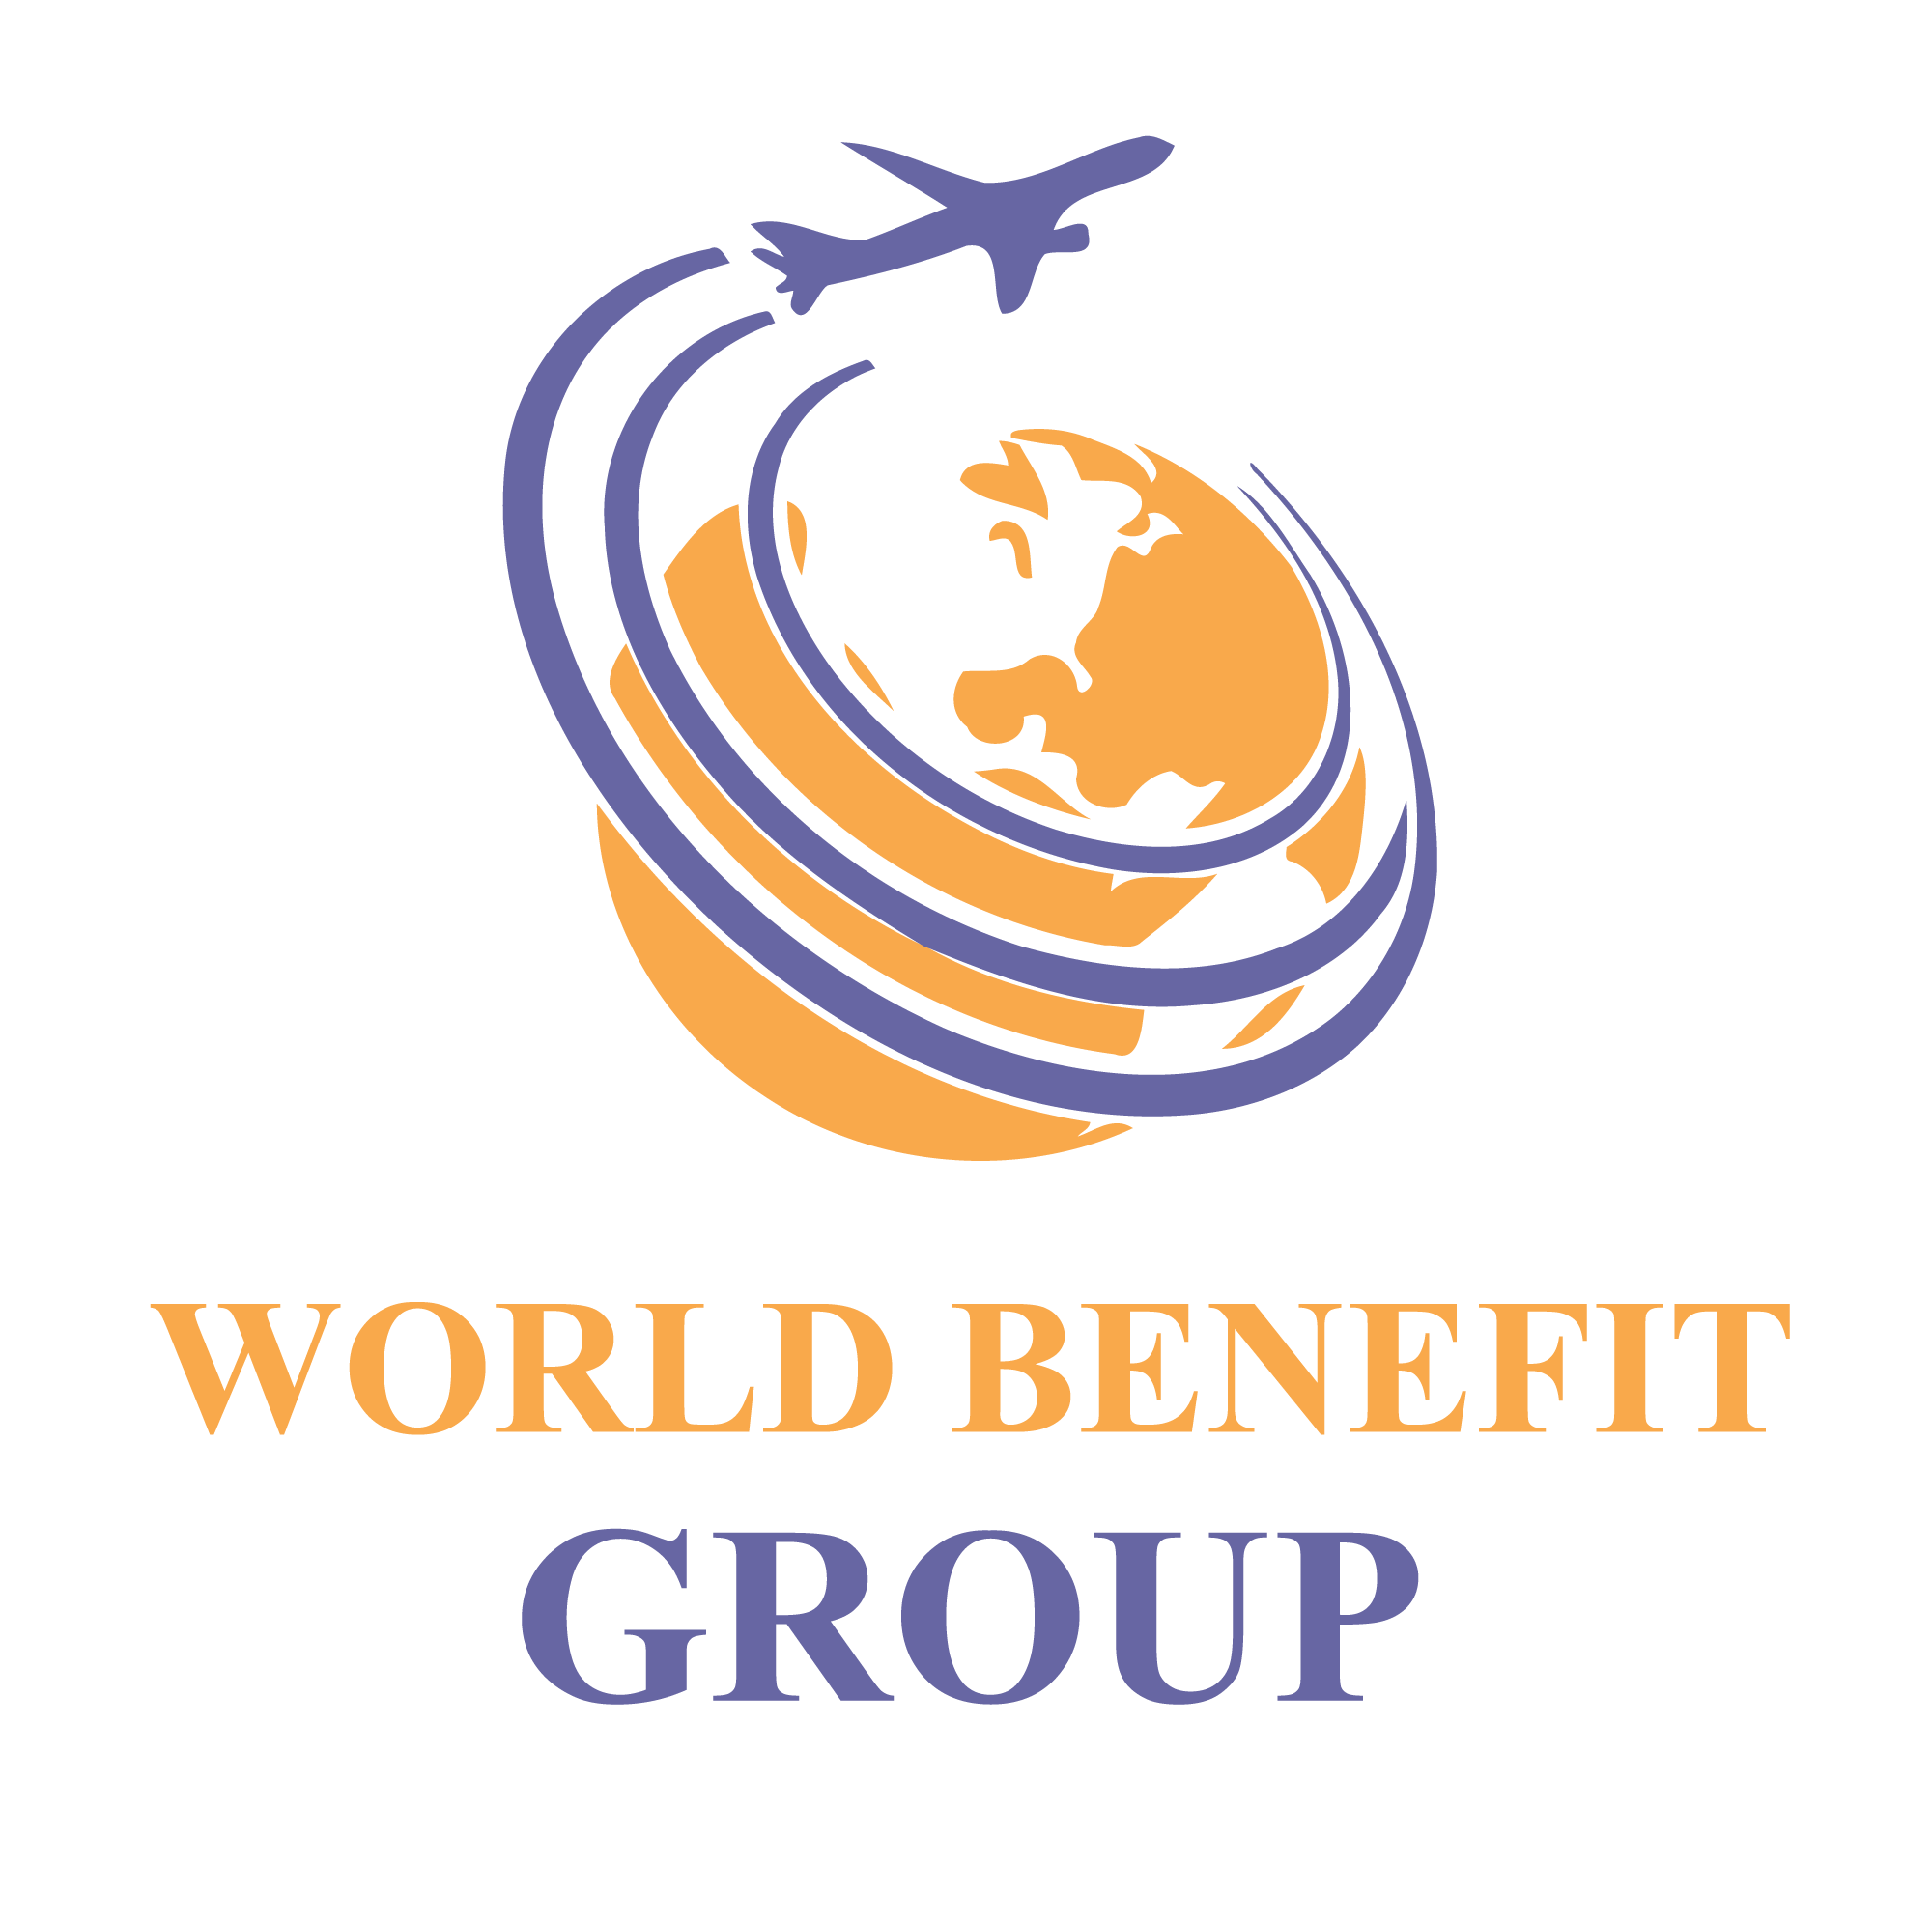 WORLD BENEFIT GROUP